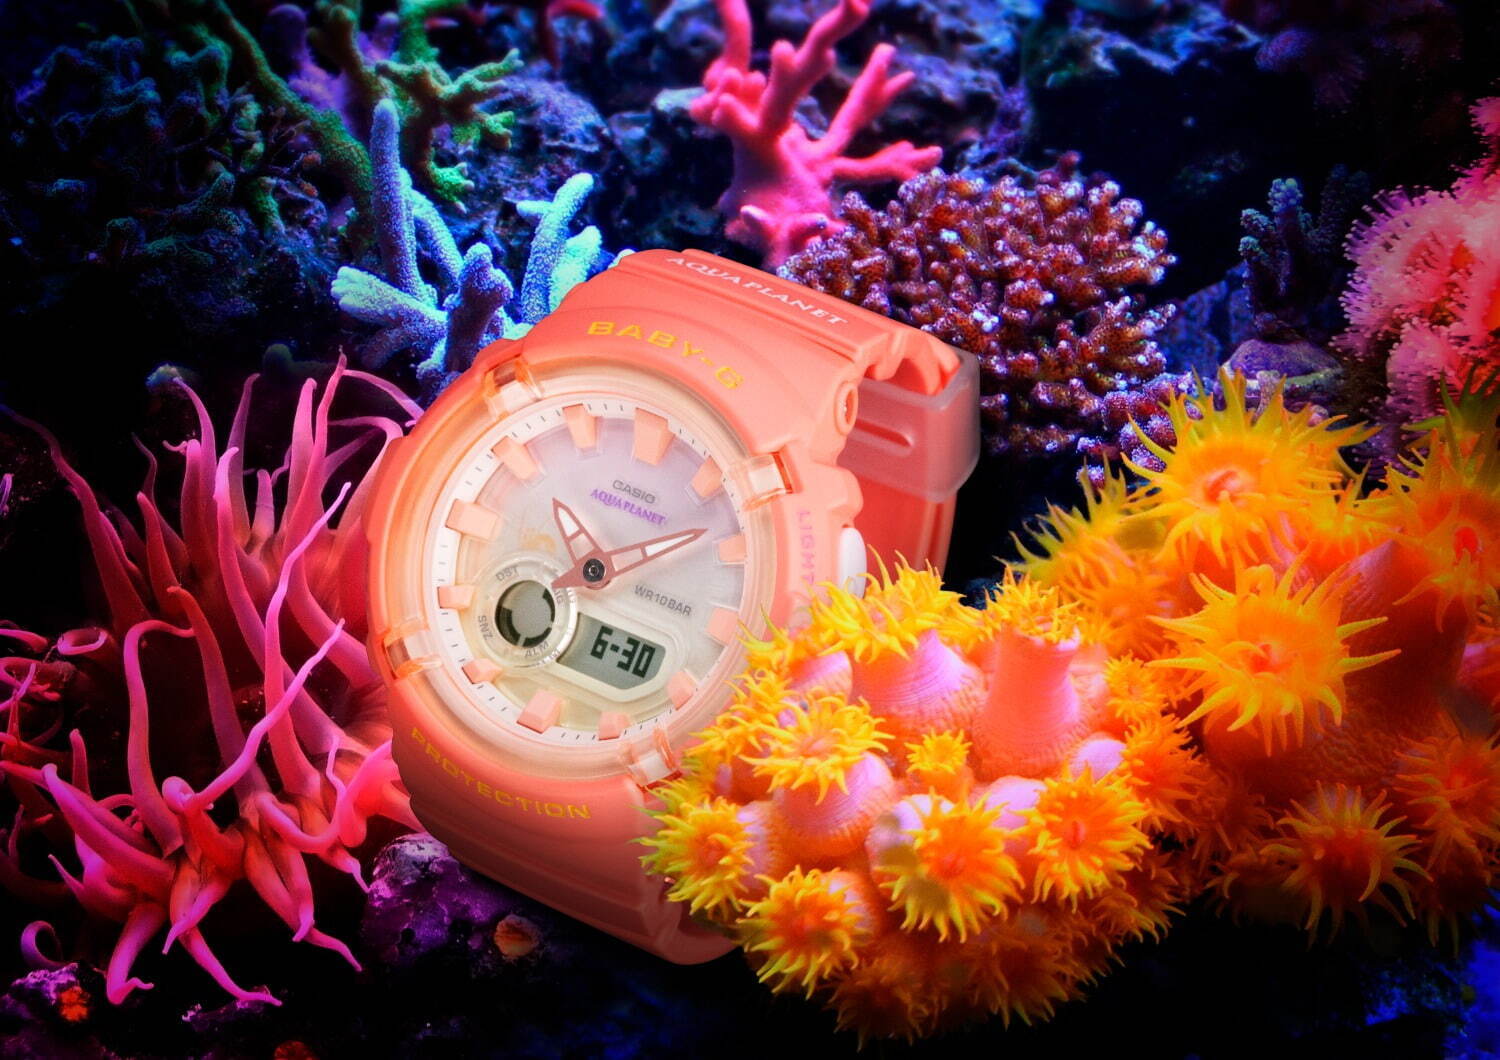 BABY-G“サンゴ”モチーフの新作腕時計、コーラルオレンジのケース